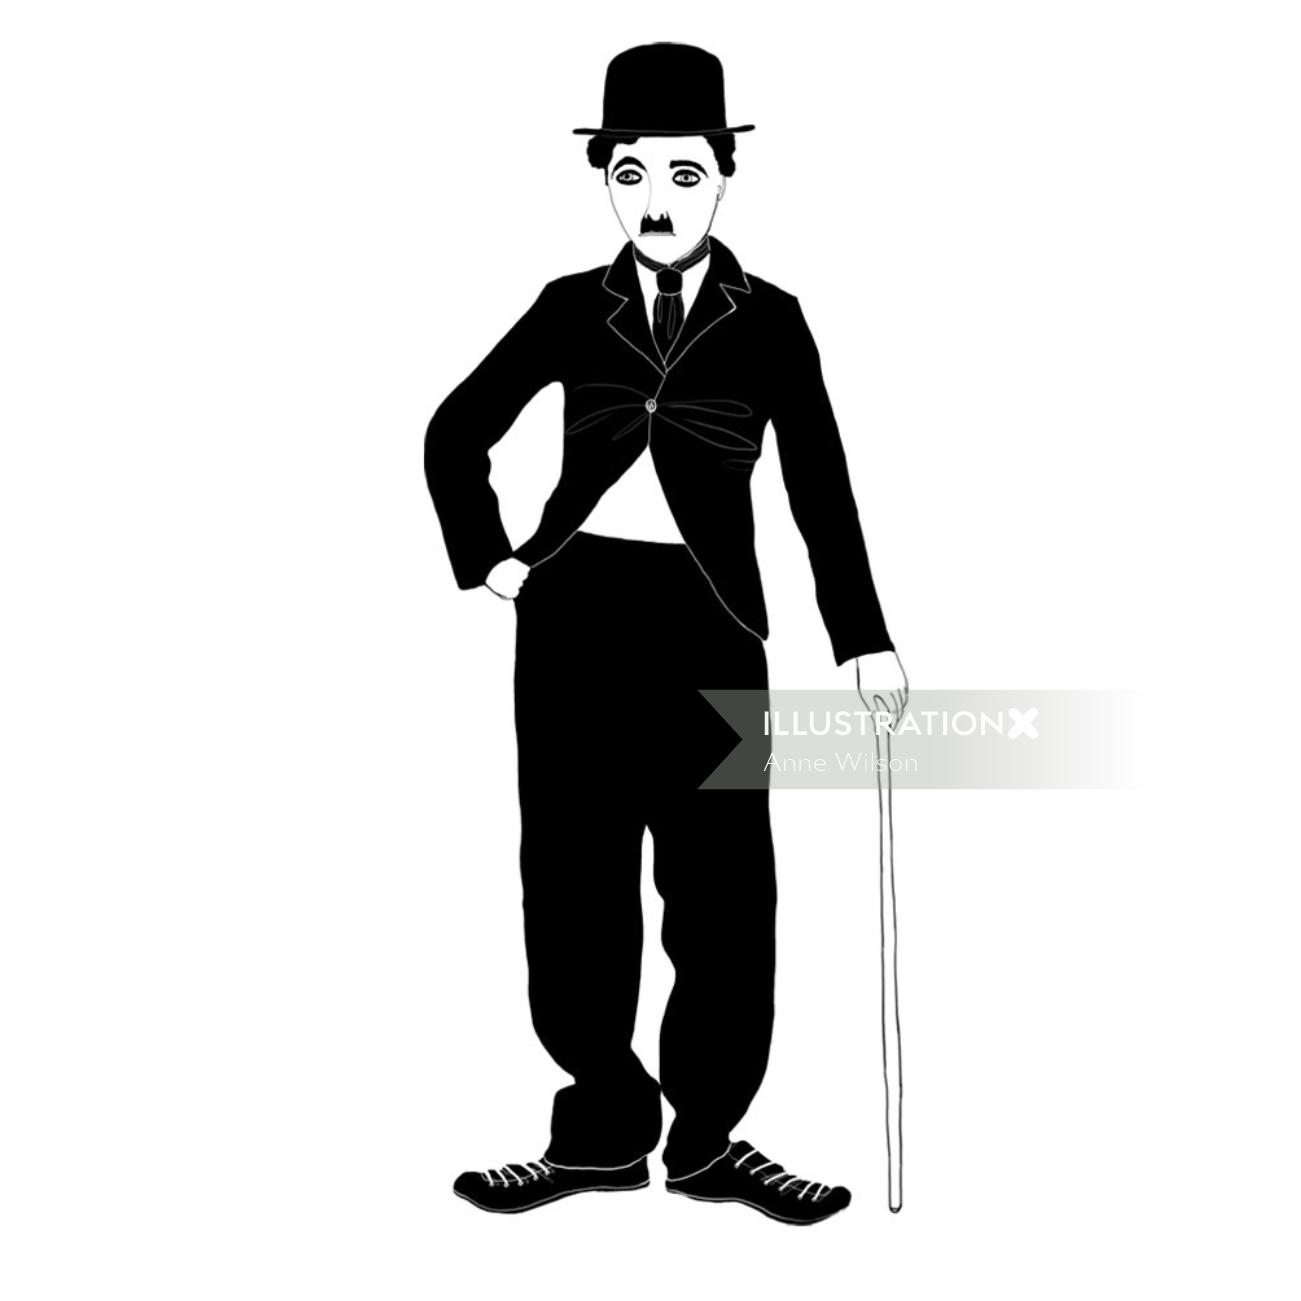 An illustration of Charlie Chaplin